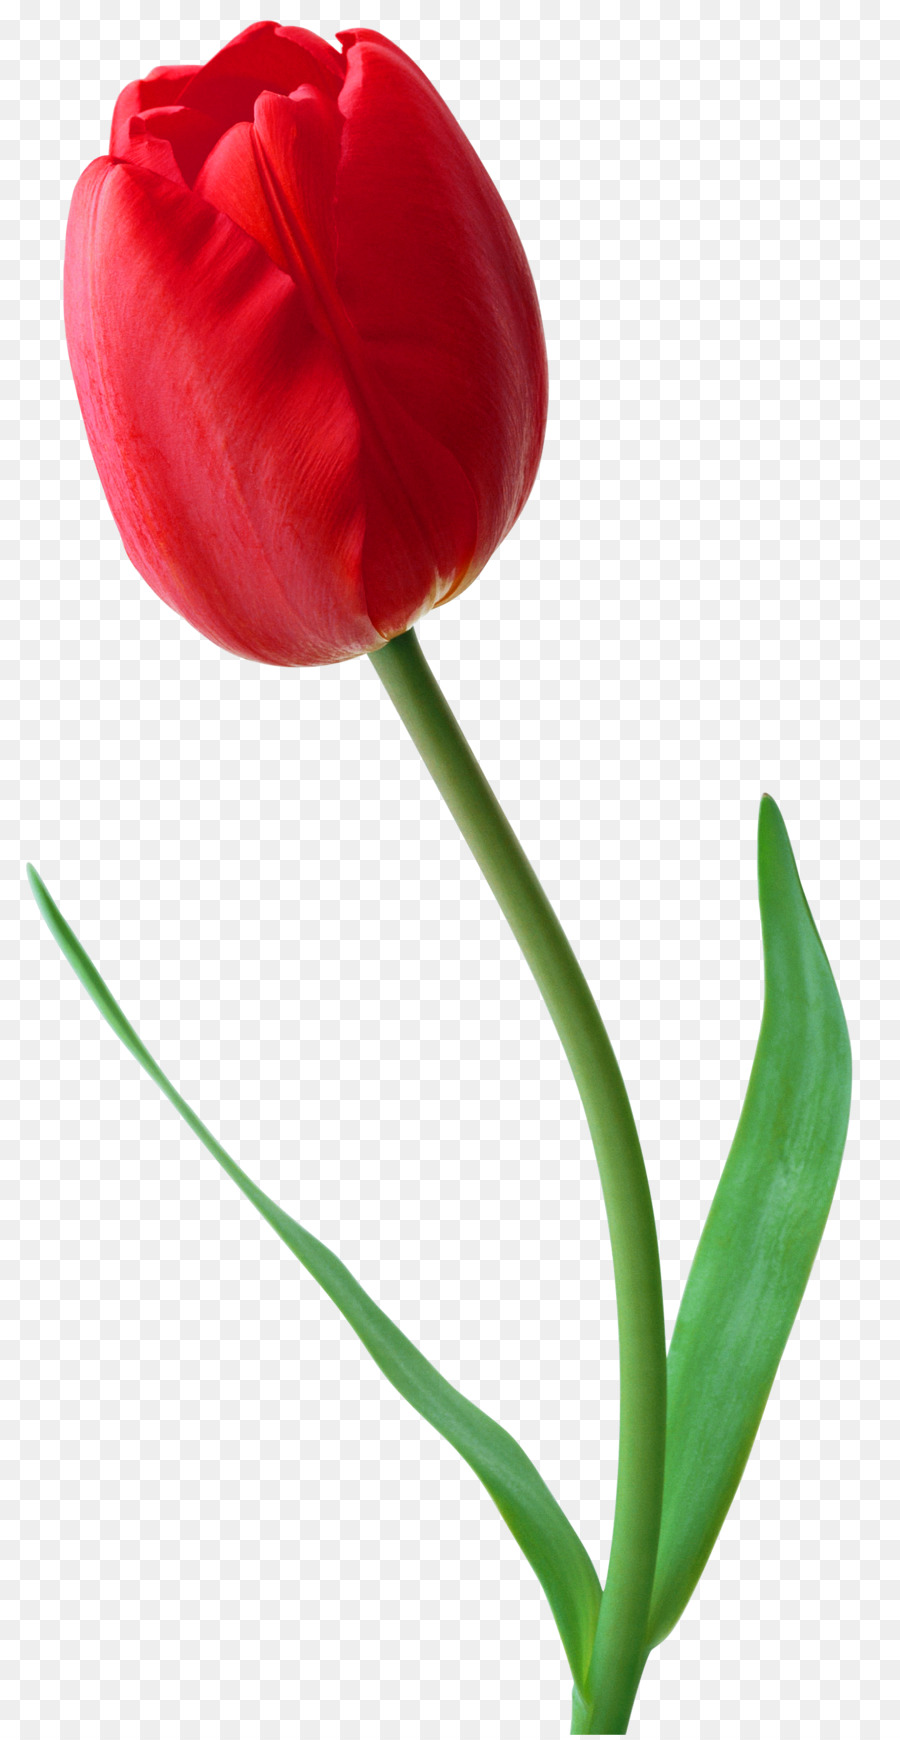 Tulip Flower Desktop Wallpaper Clip art - Tulip PNG Transparent Images png download - 1420*2738 - Free Transparent Tulip png Download.